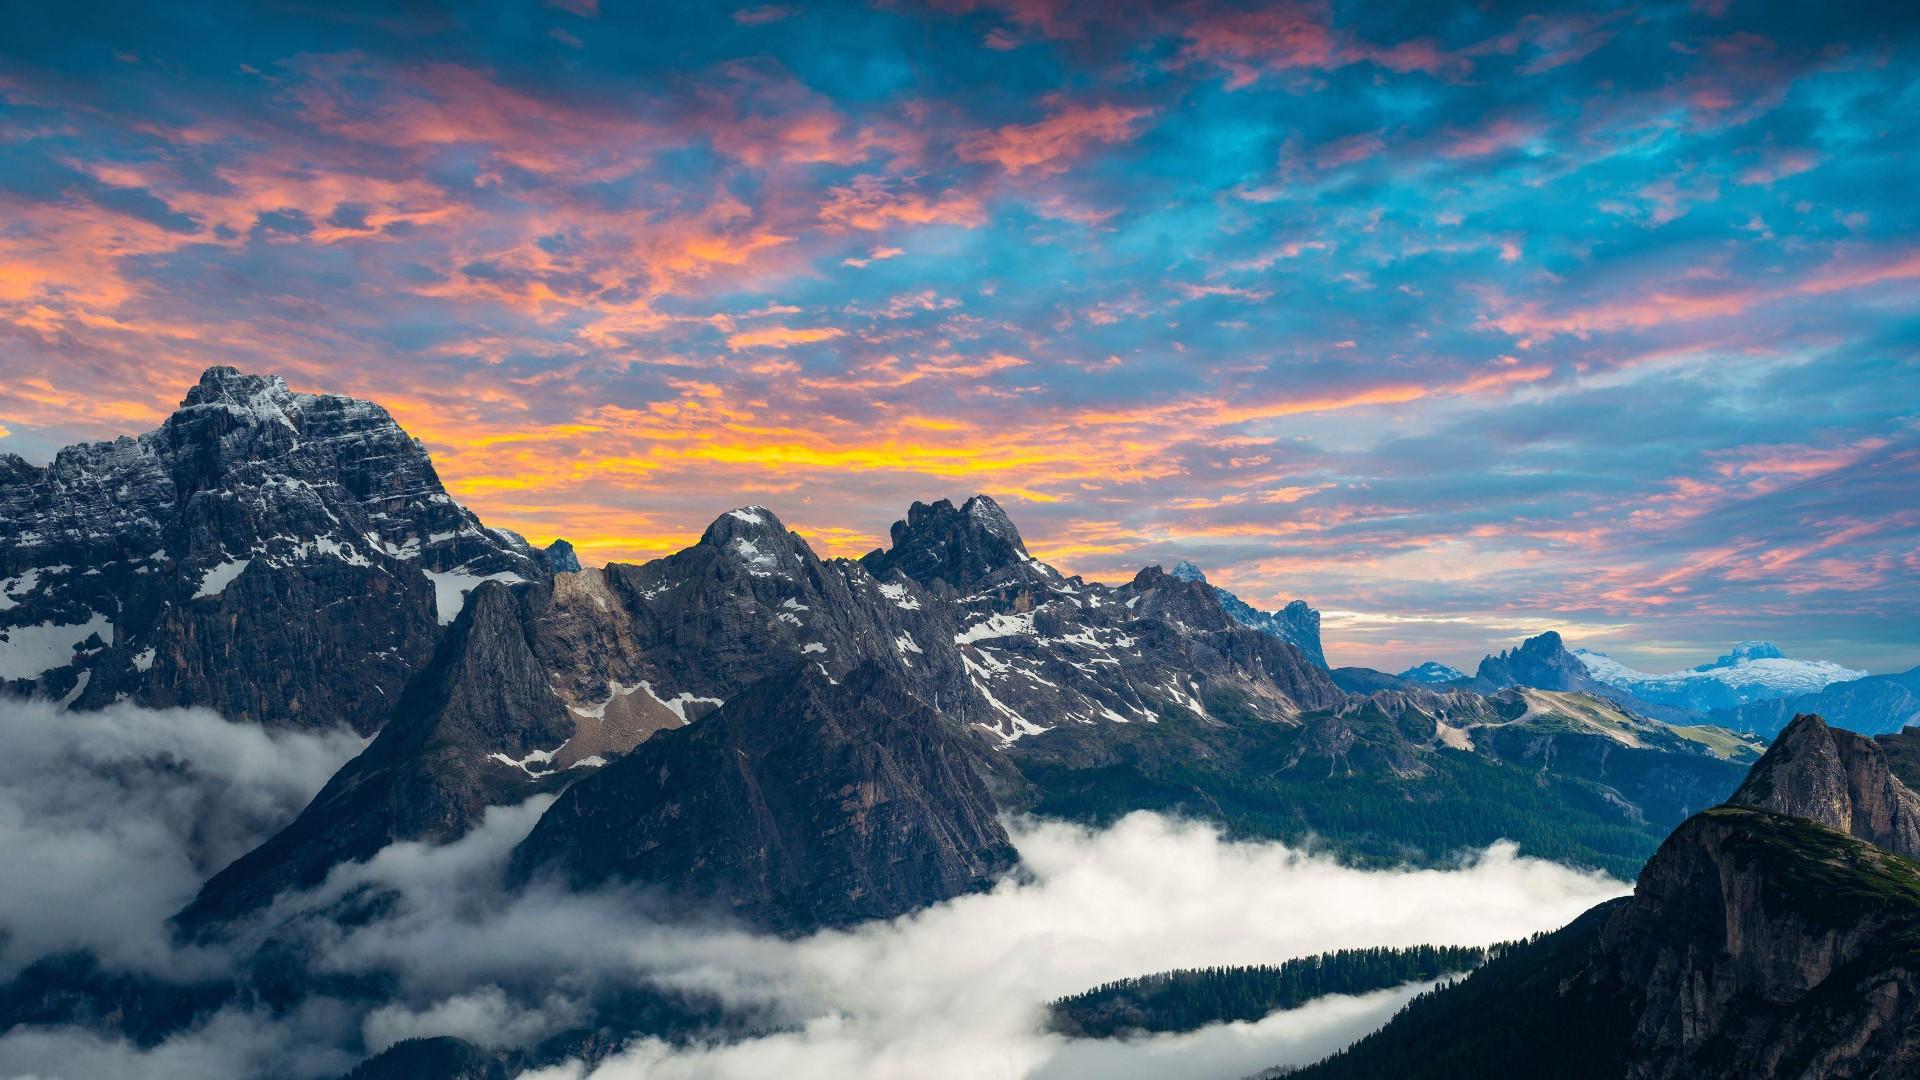 Dolomites Mountain Range Located in Northeastern Italy